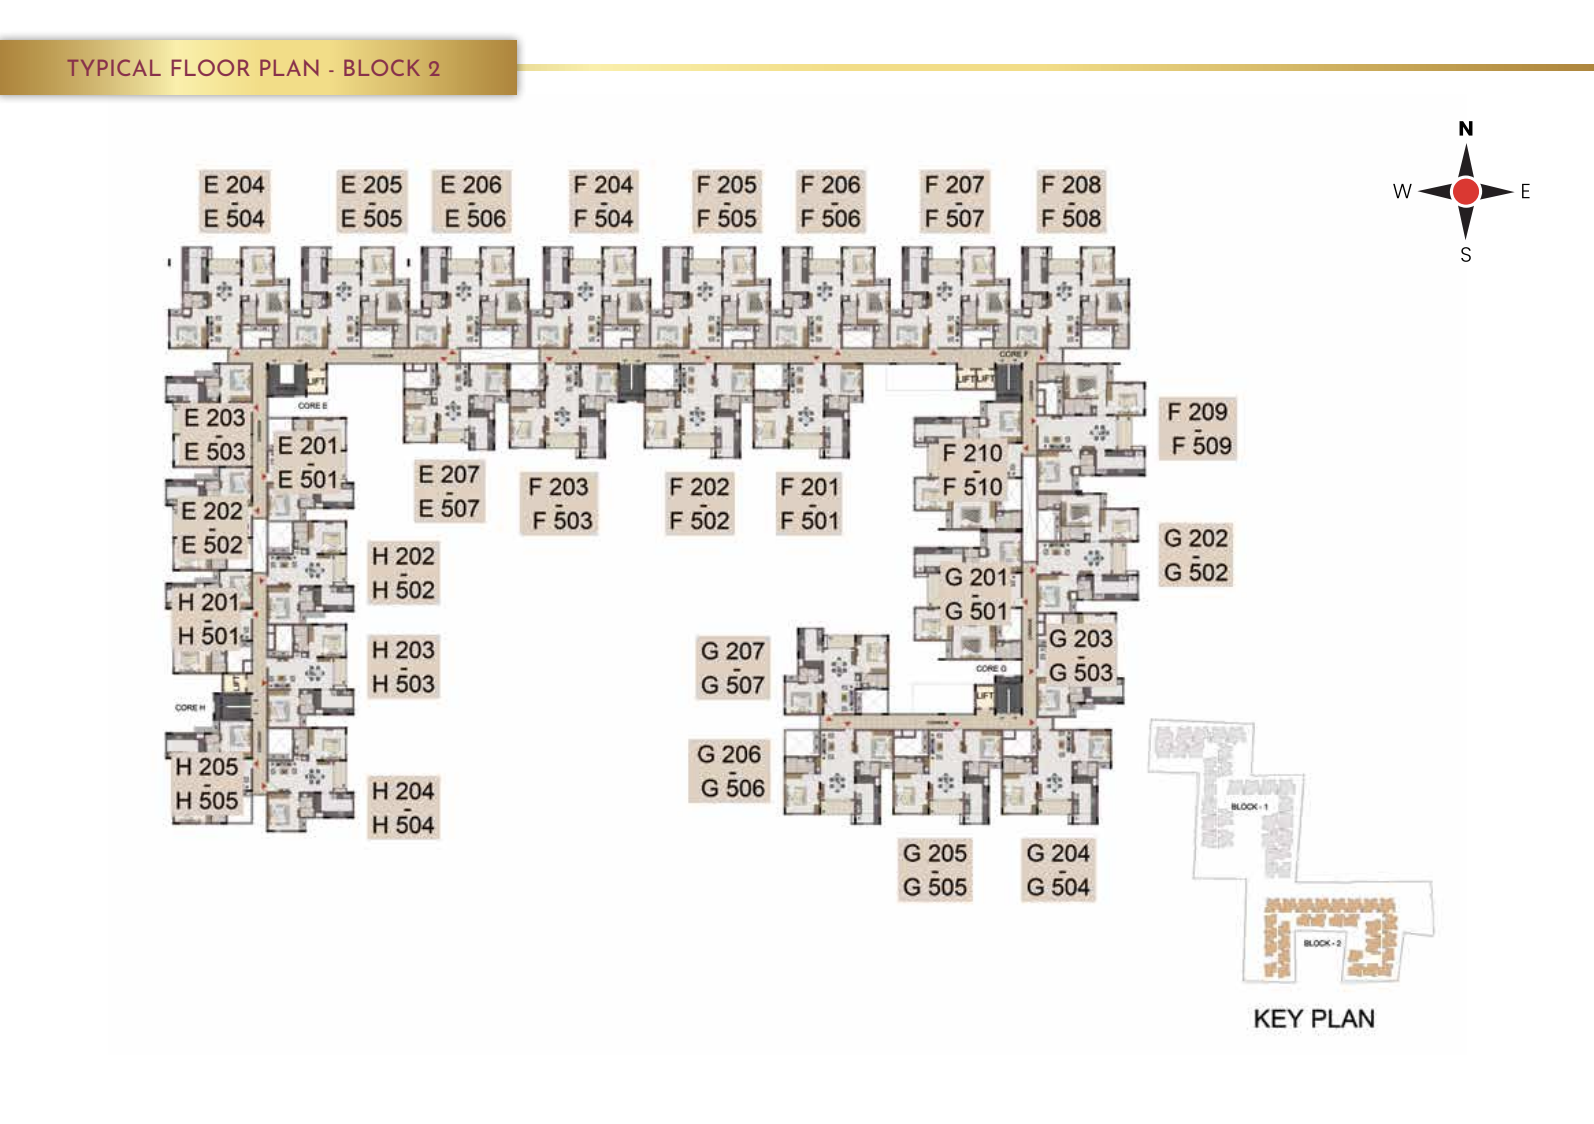 Casagrand Palm Springs - Typical Floor Plan - Block 2